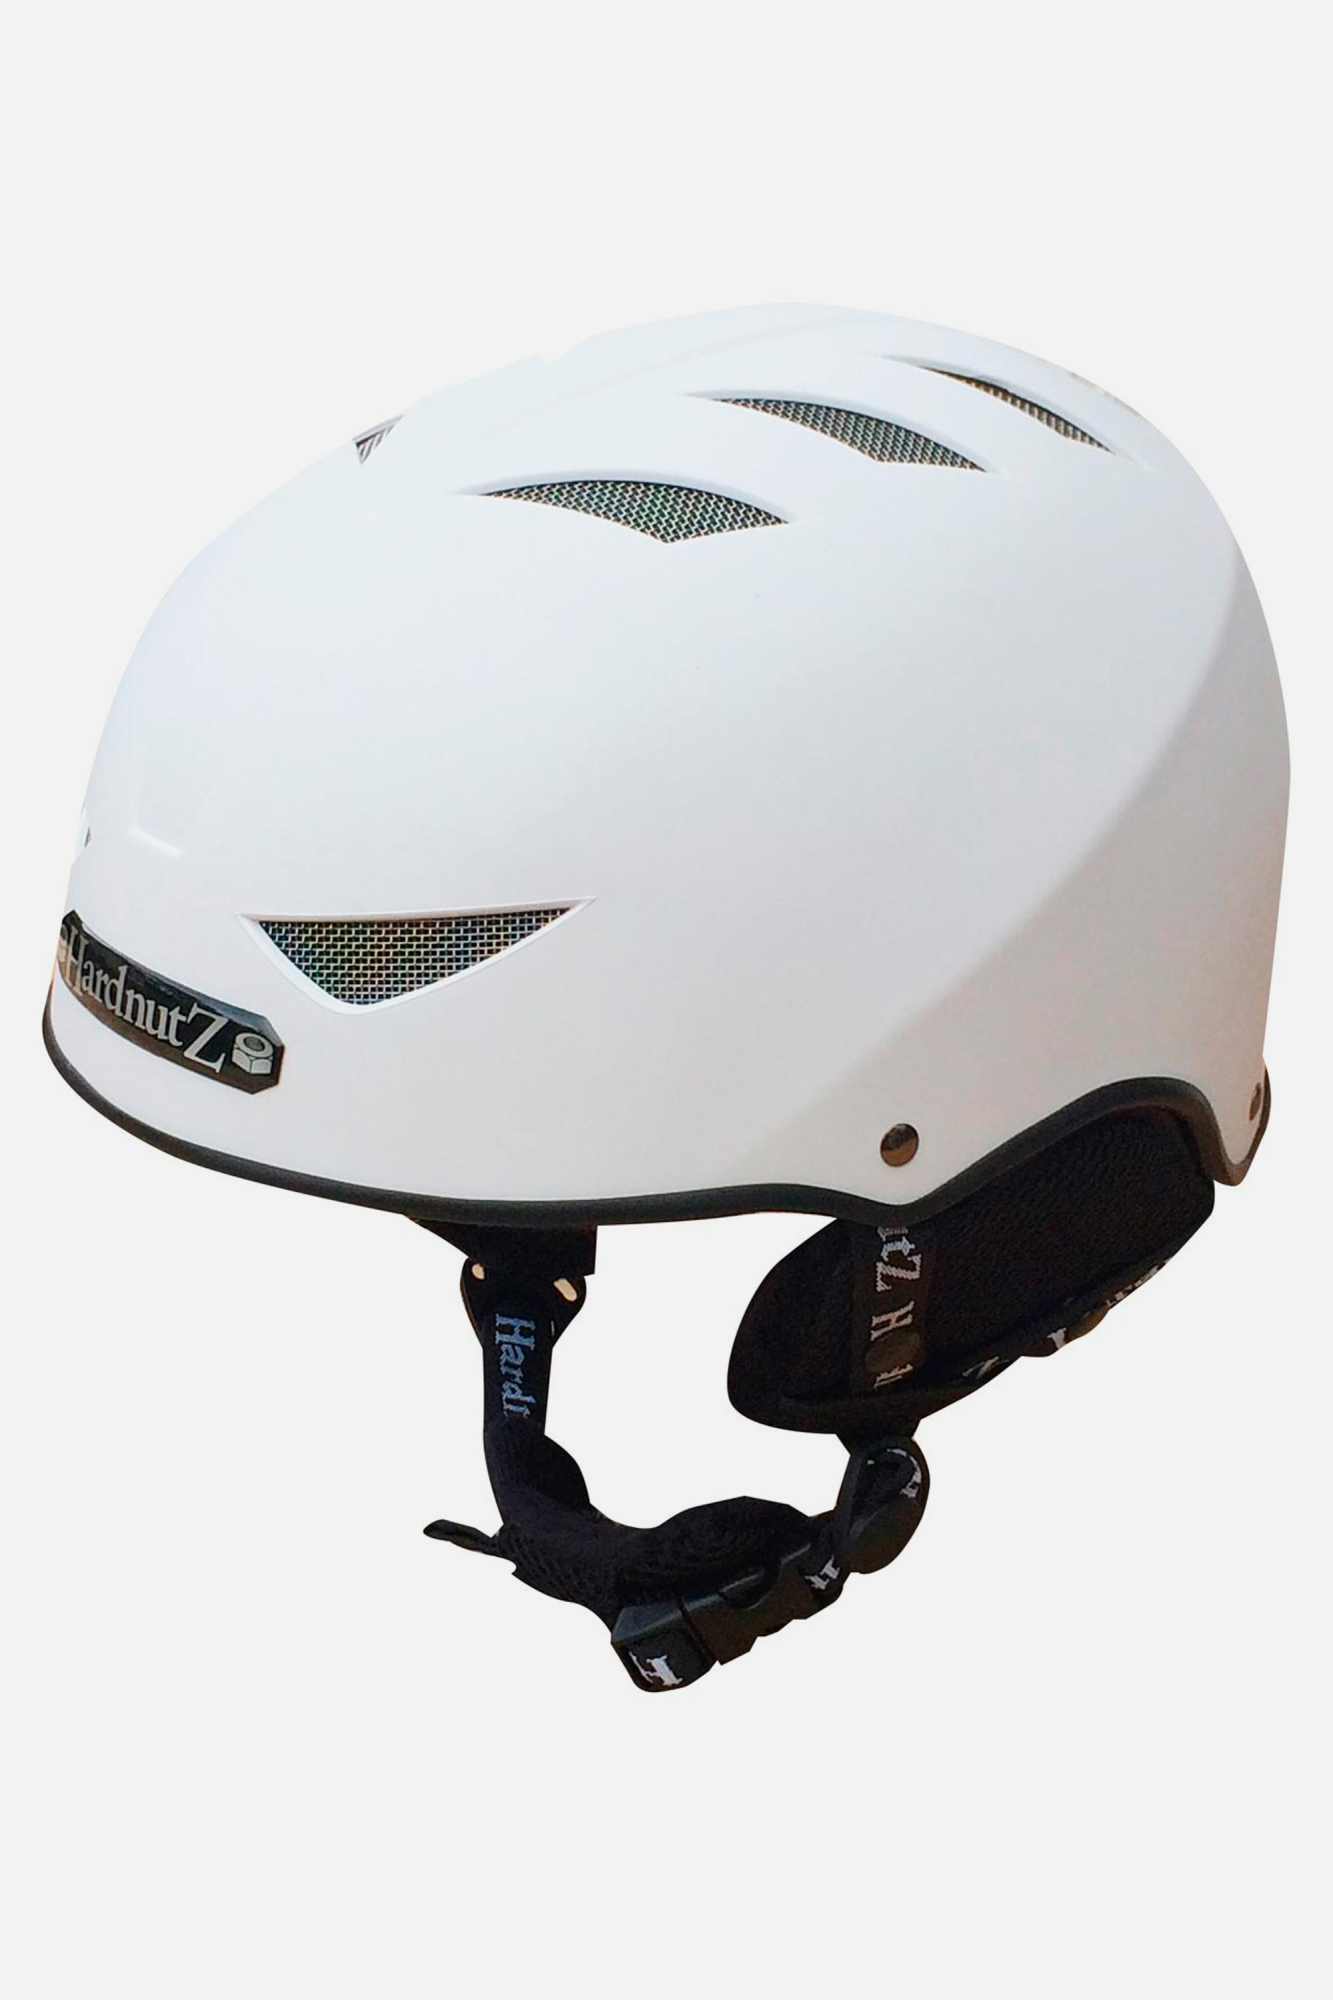 Hardnutz Rubber Helmet White - Size: Large